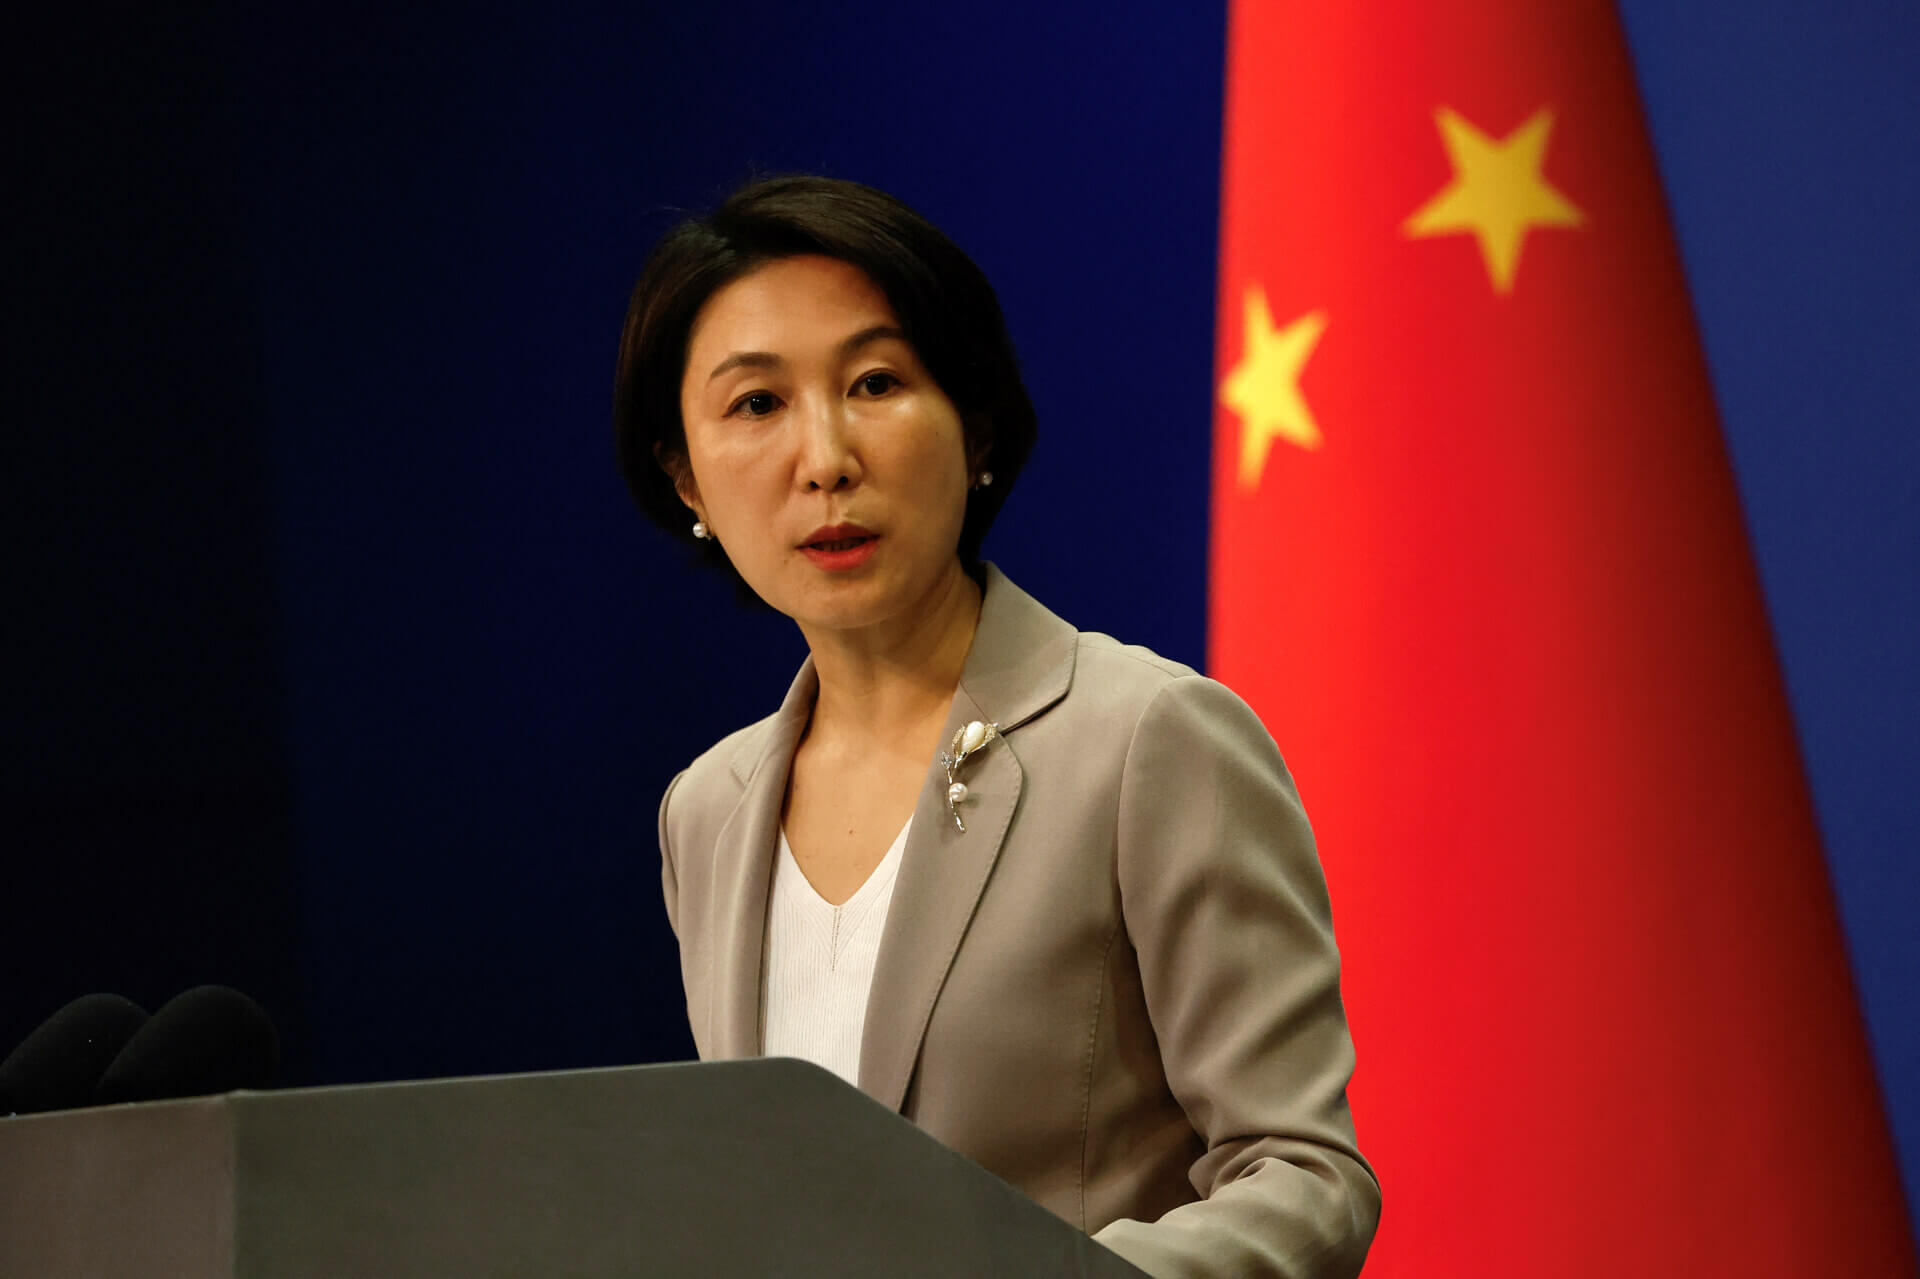 China Accuses US of “Economic Bullying” via Semiconductor Ban Amid Chip War